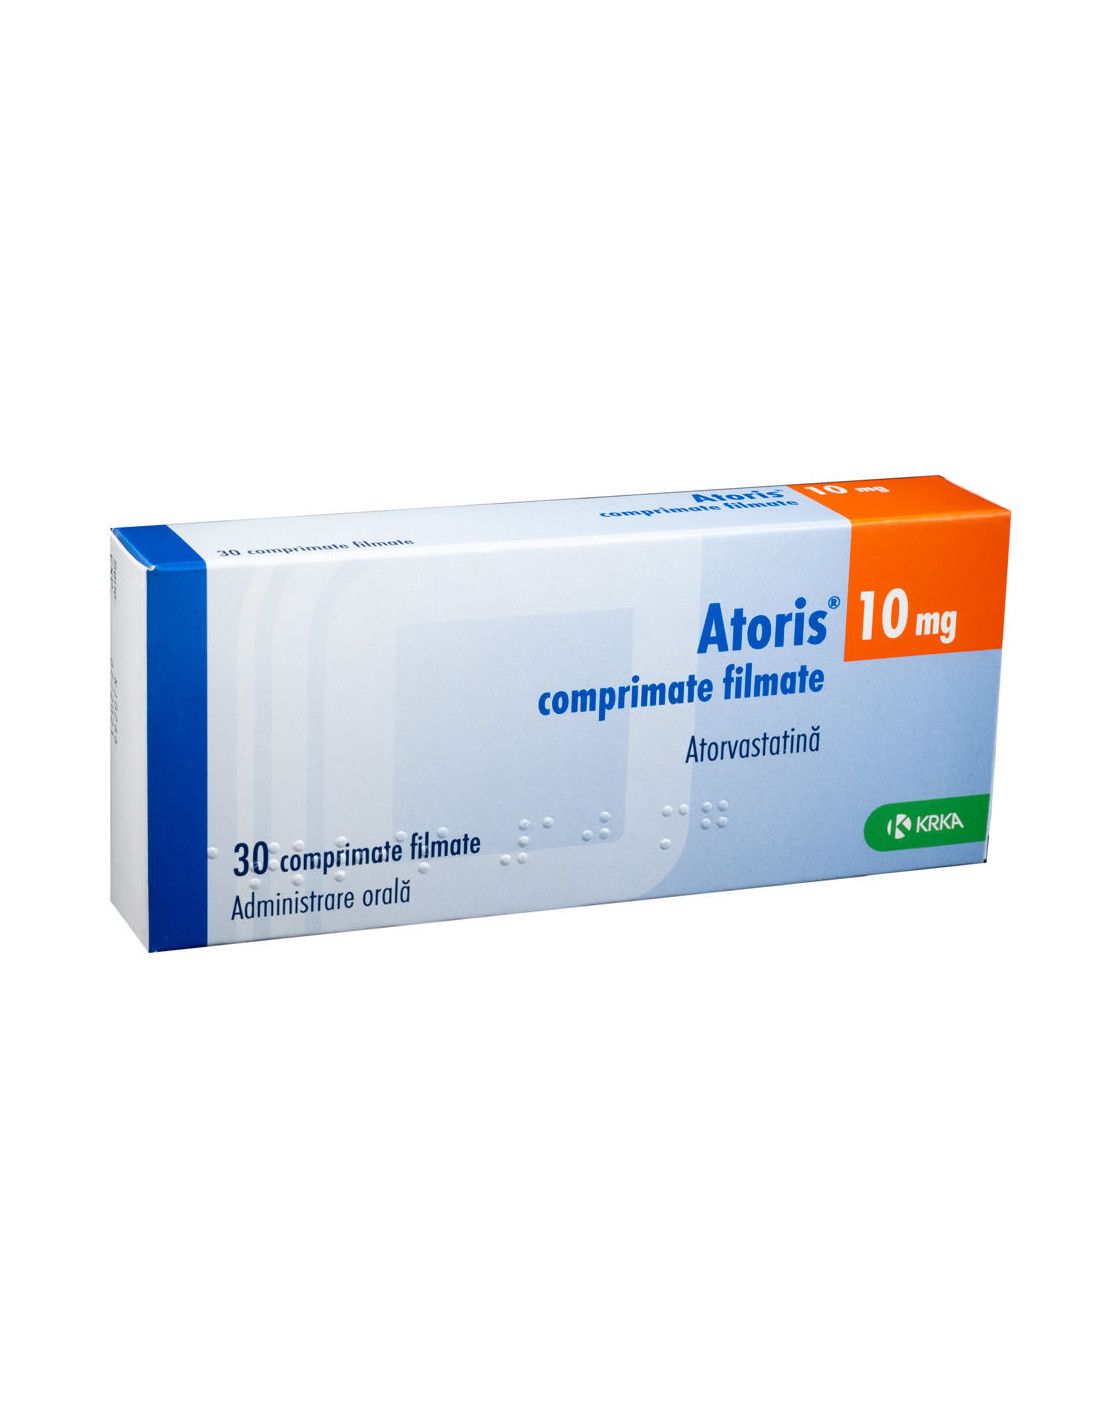 Atorvastatina Mylan 20 mg, comprimate filmate Prospect atorvastatinum